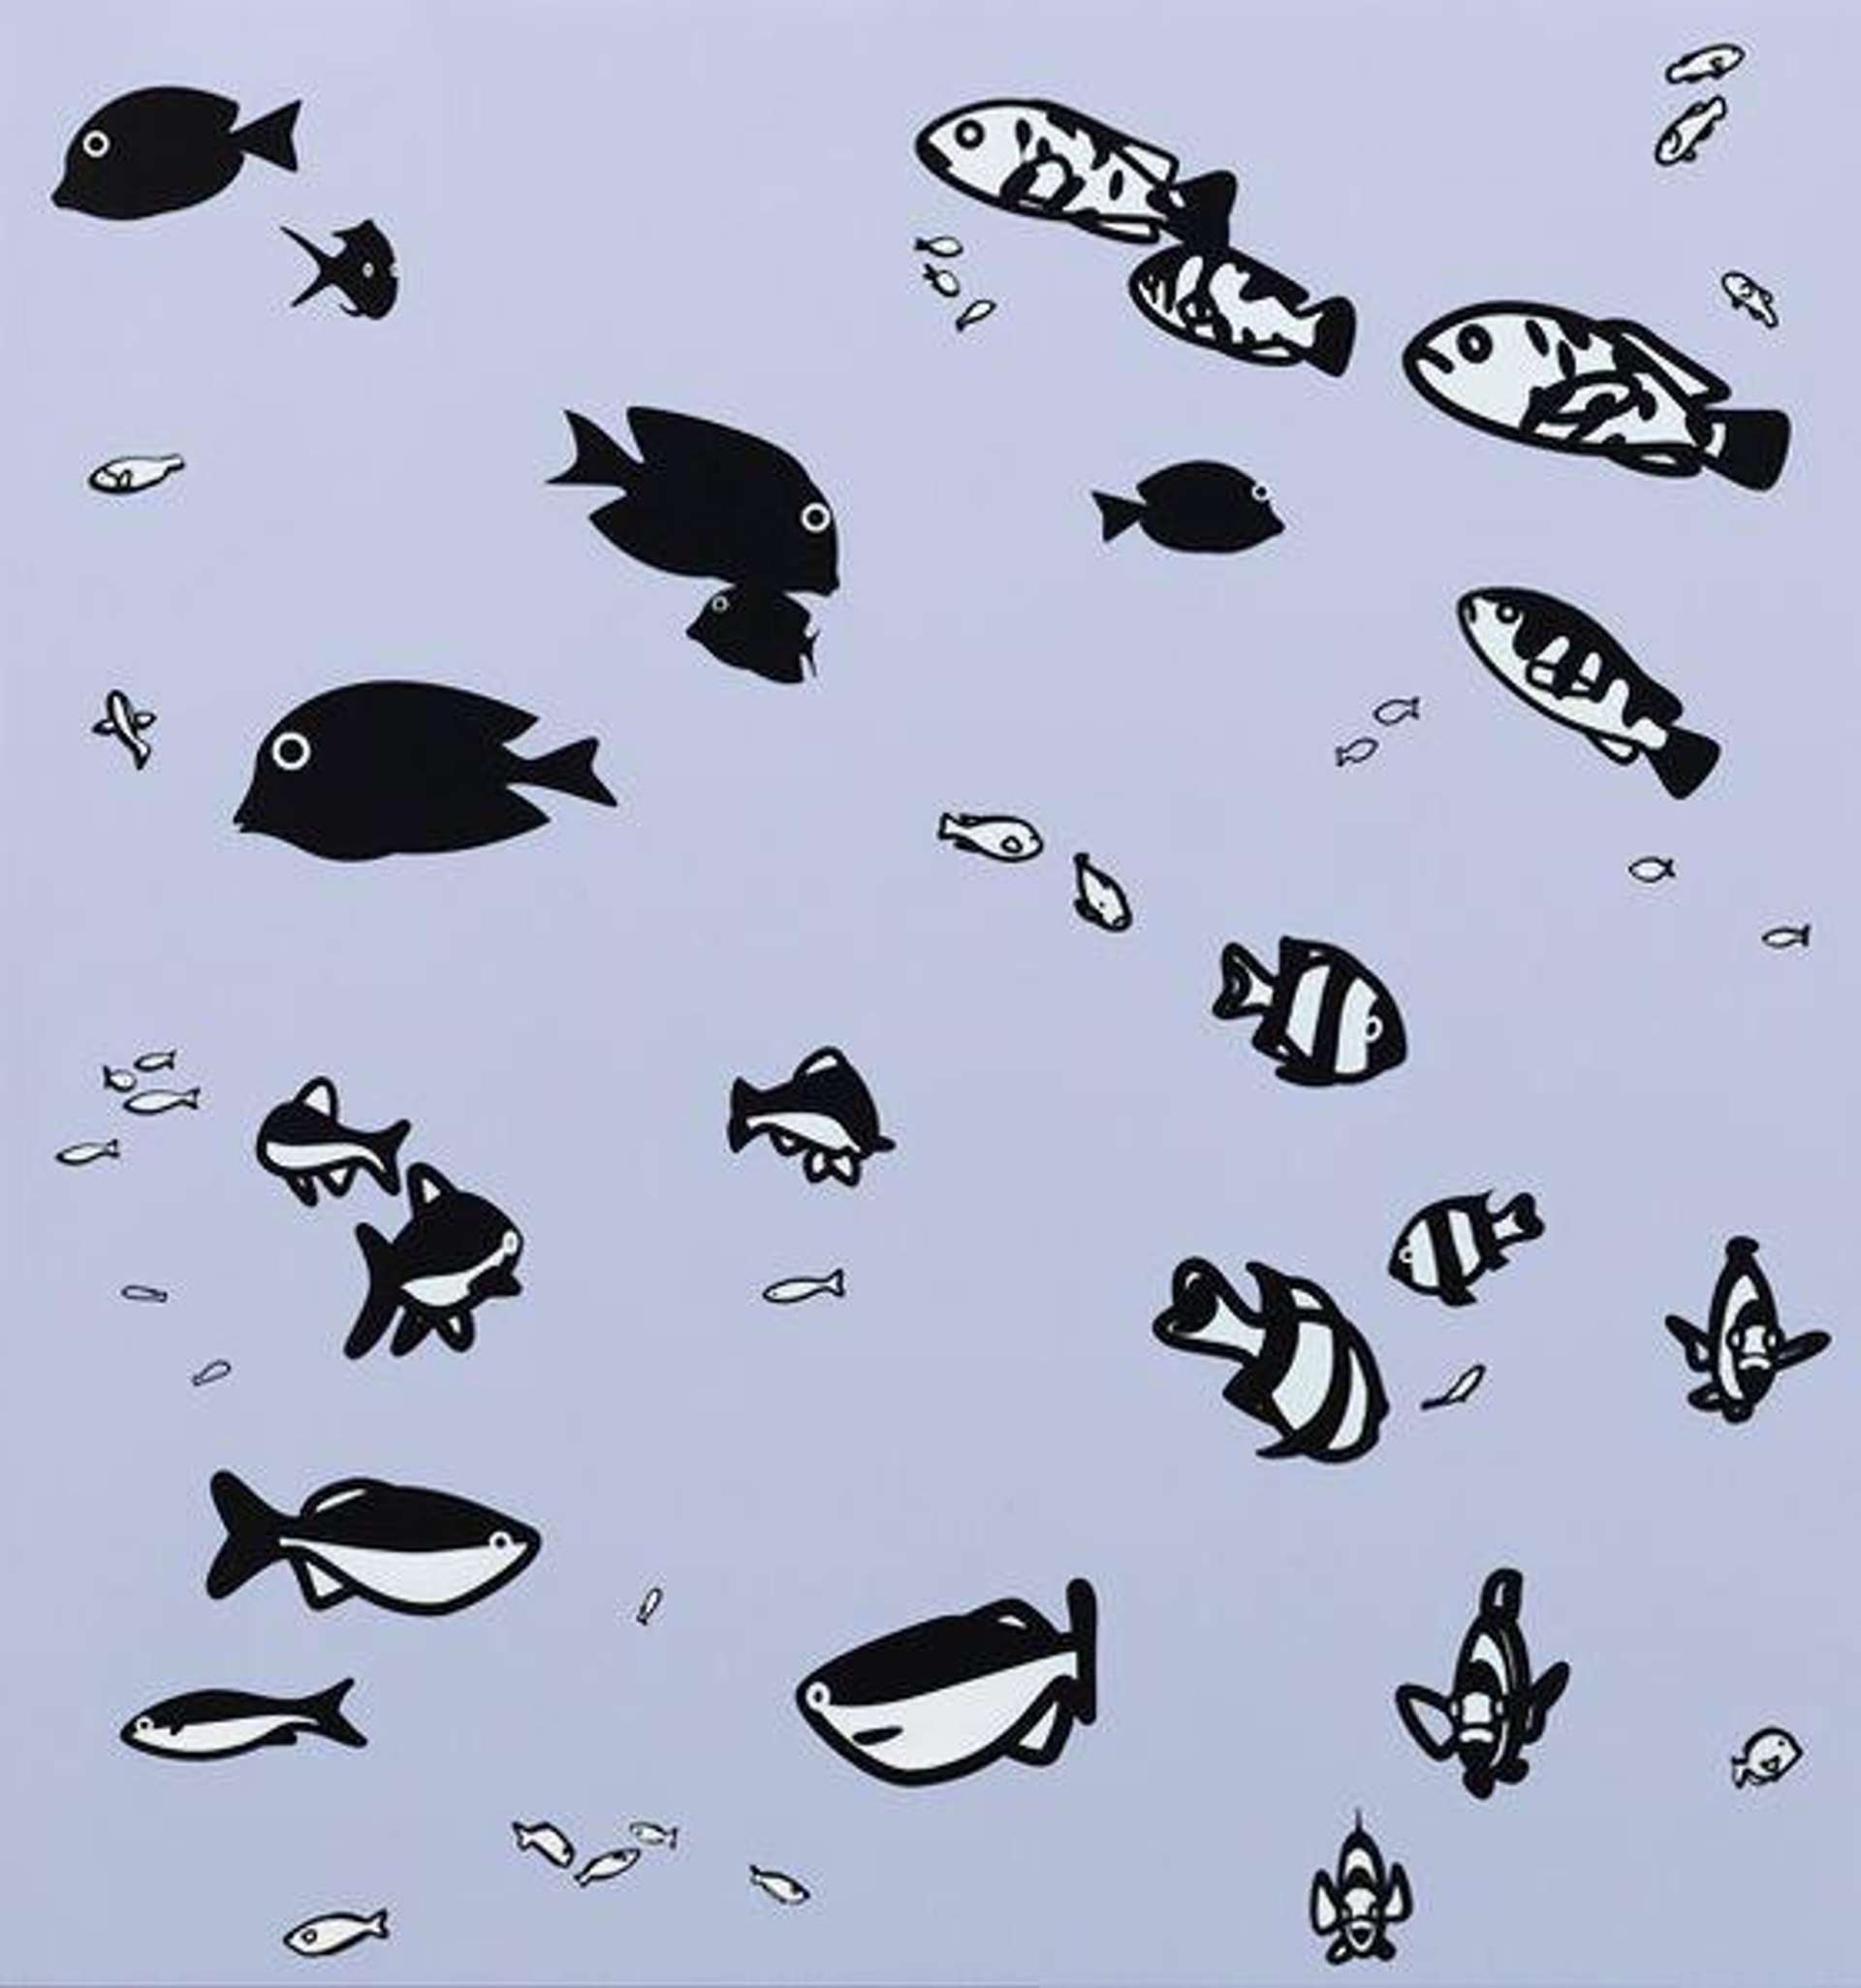 We Swam Amongst The Fishes 1 - Signed Print by Julian Opie 2003 - MyArtBroker